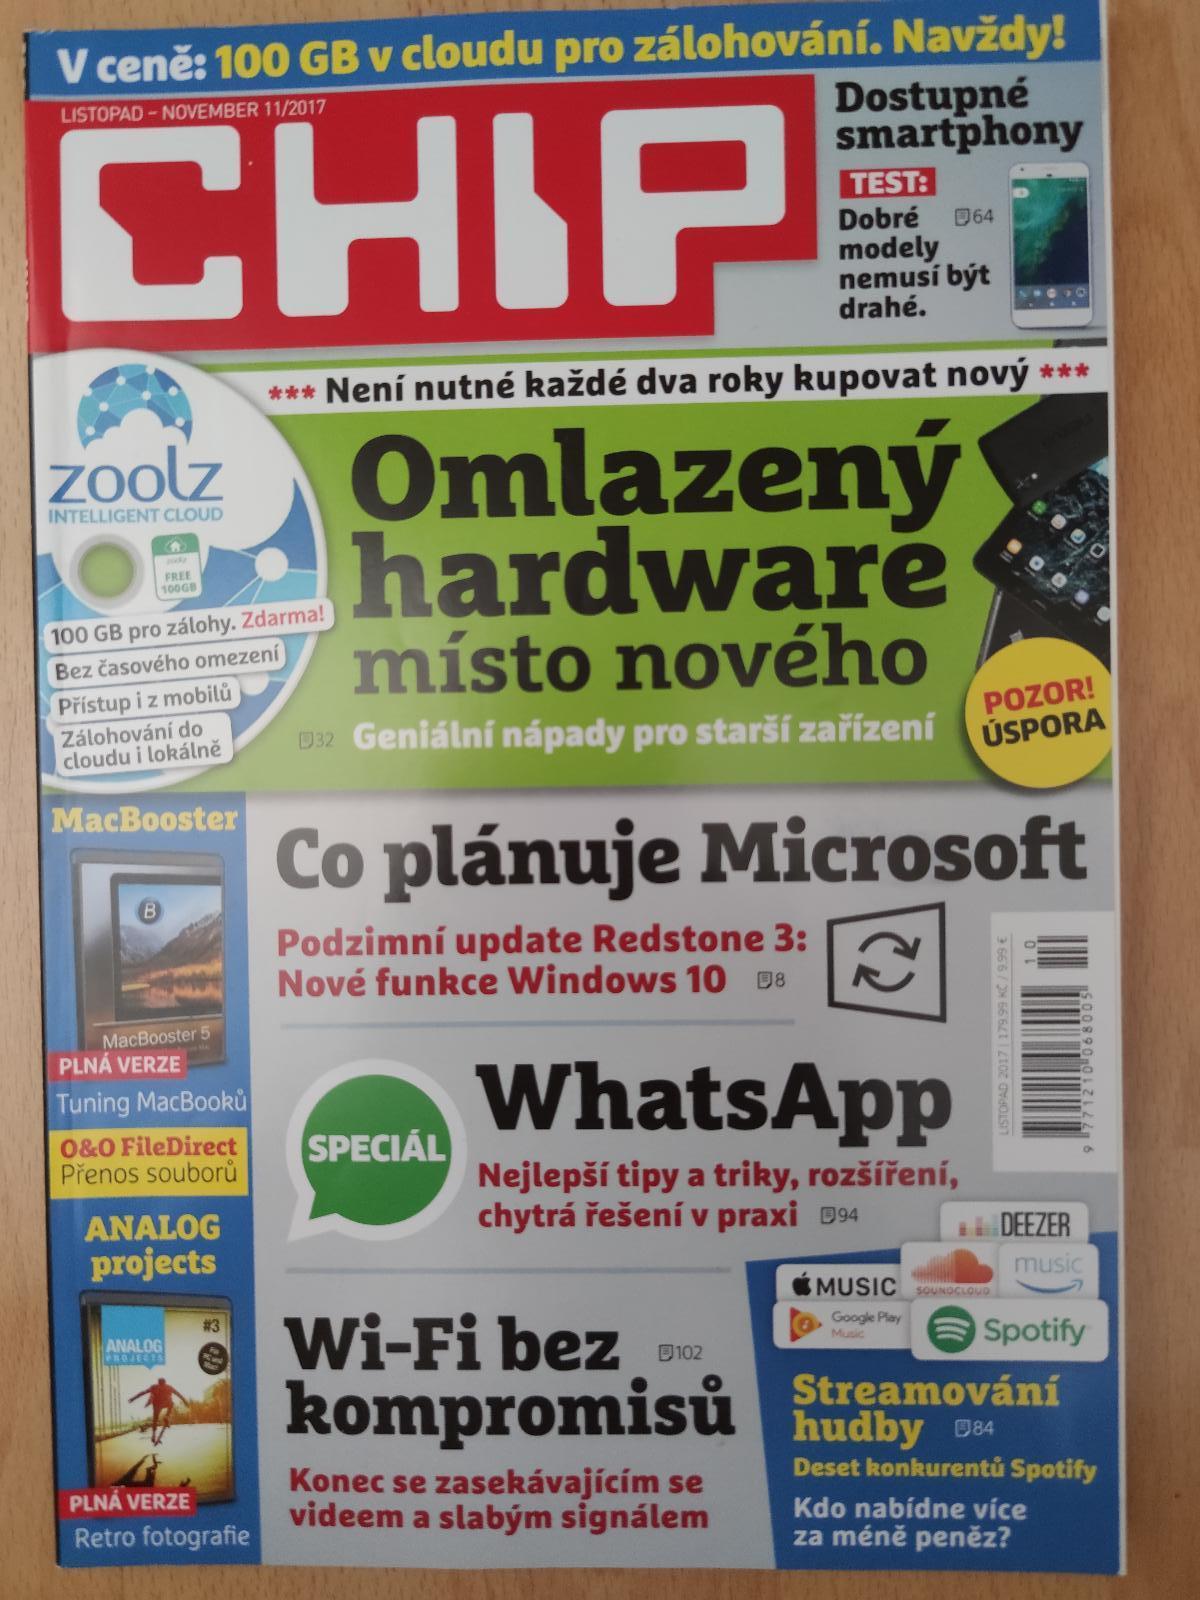 ČASOPIS CHIP - LISTOPAD 2017 BEZ DVD! - Knihy a časopisy